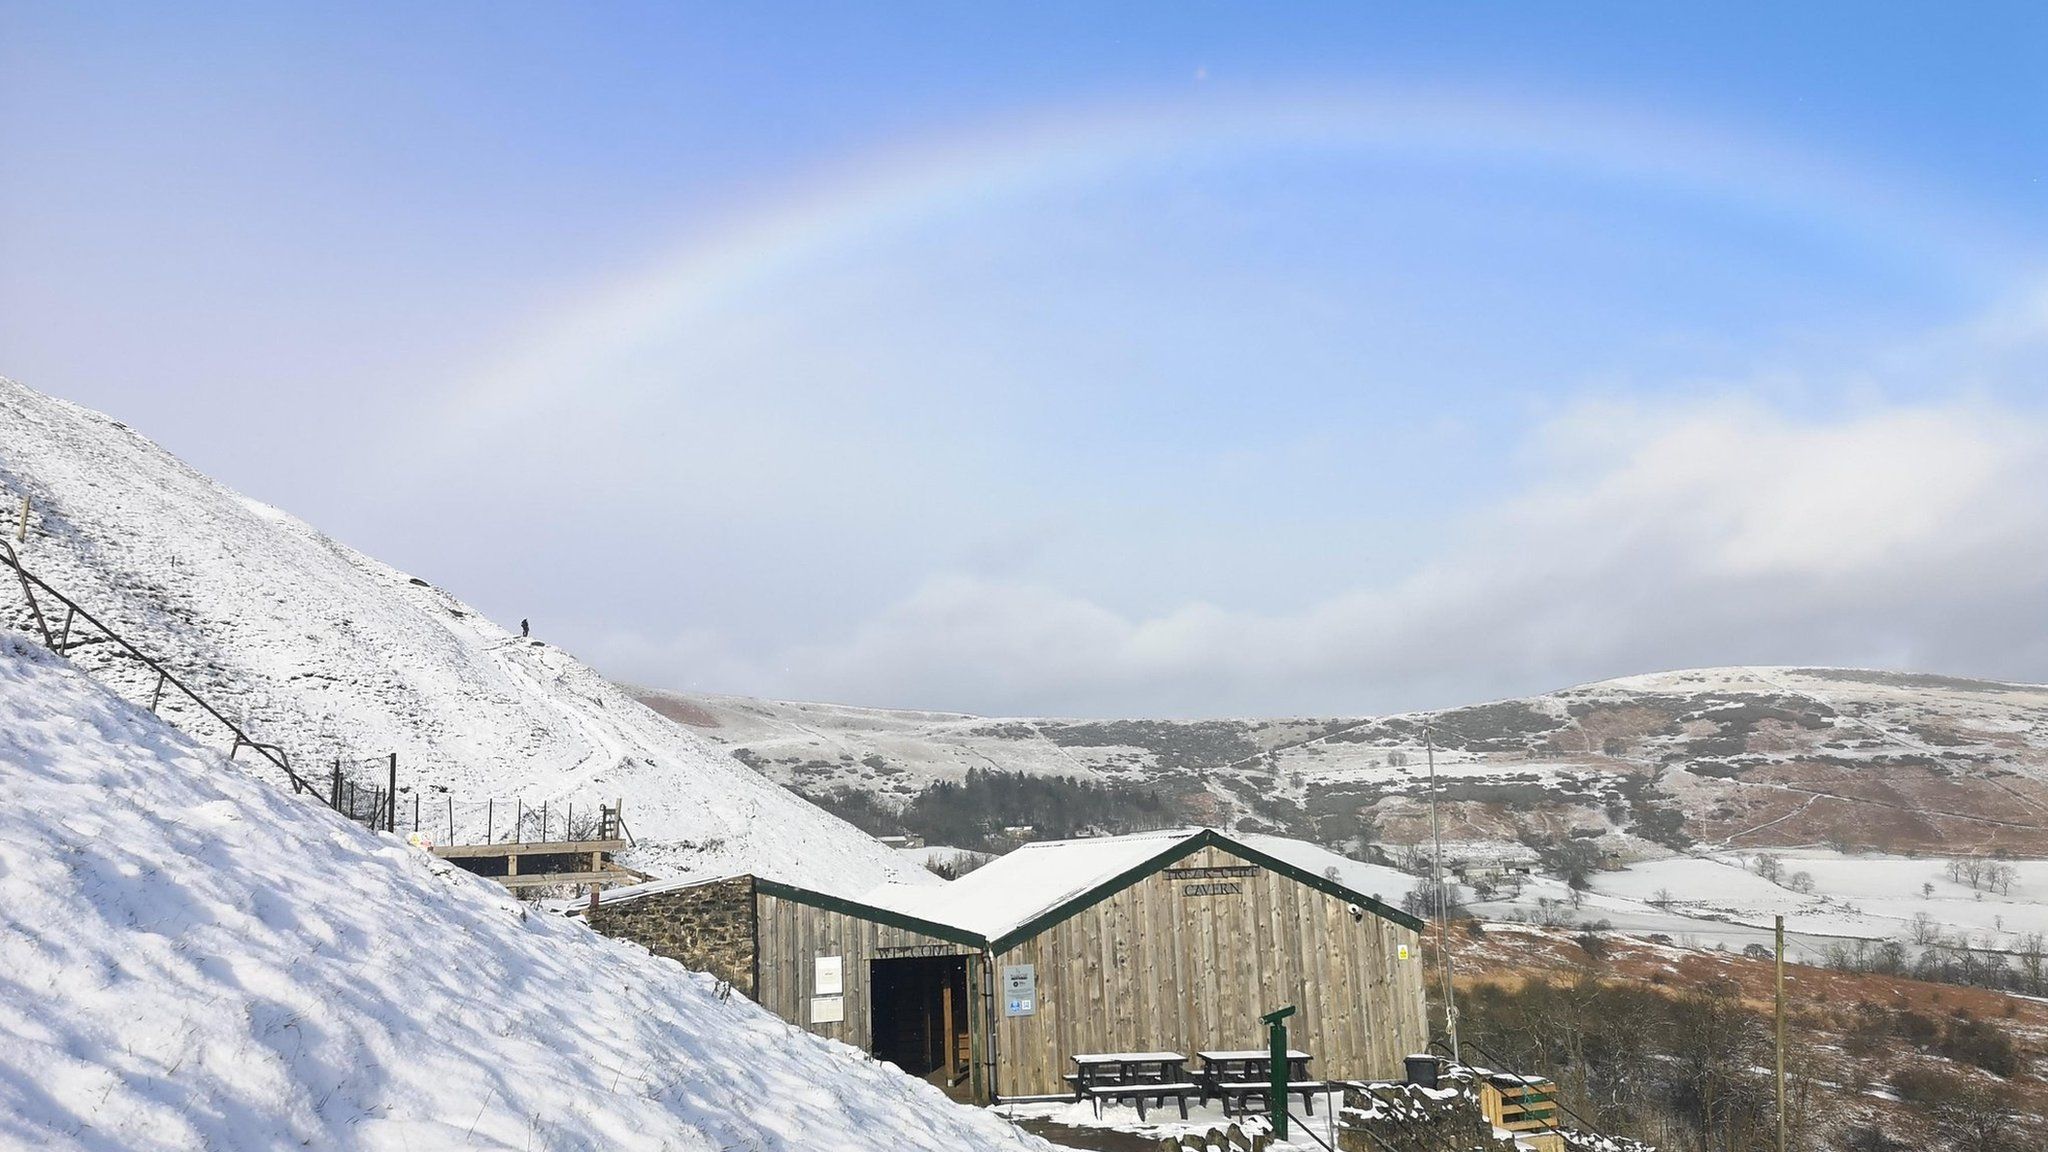 "snowbow" in the Peak District